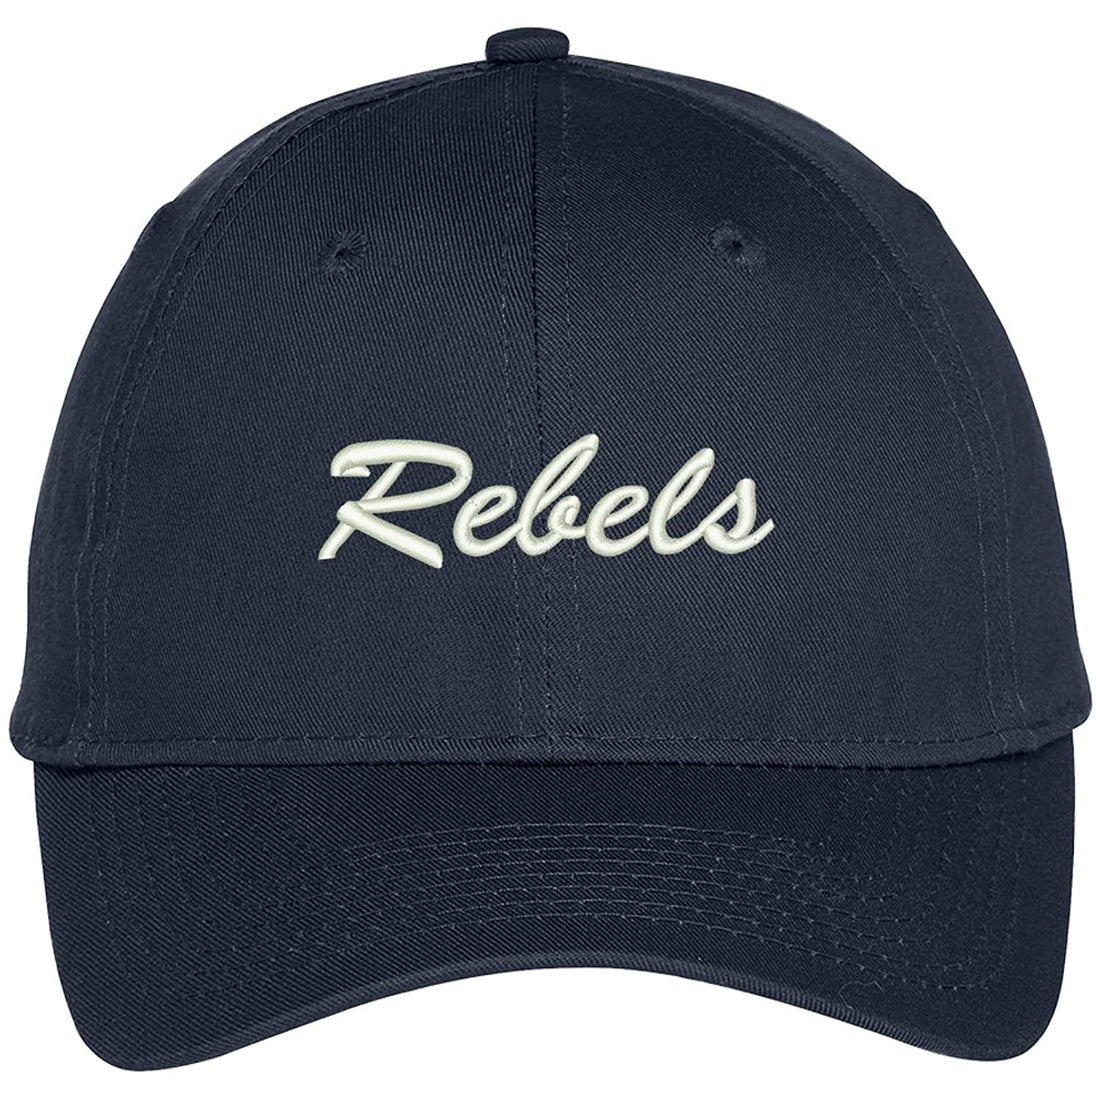 Trendy Apparel Shop Rebels Embroidered Team Nickname Mascot Cap